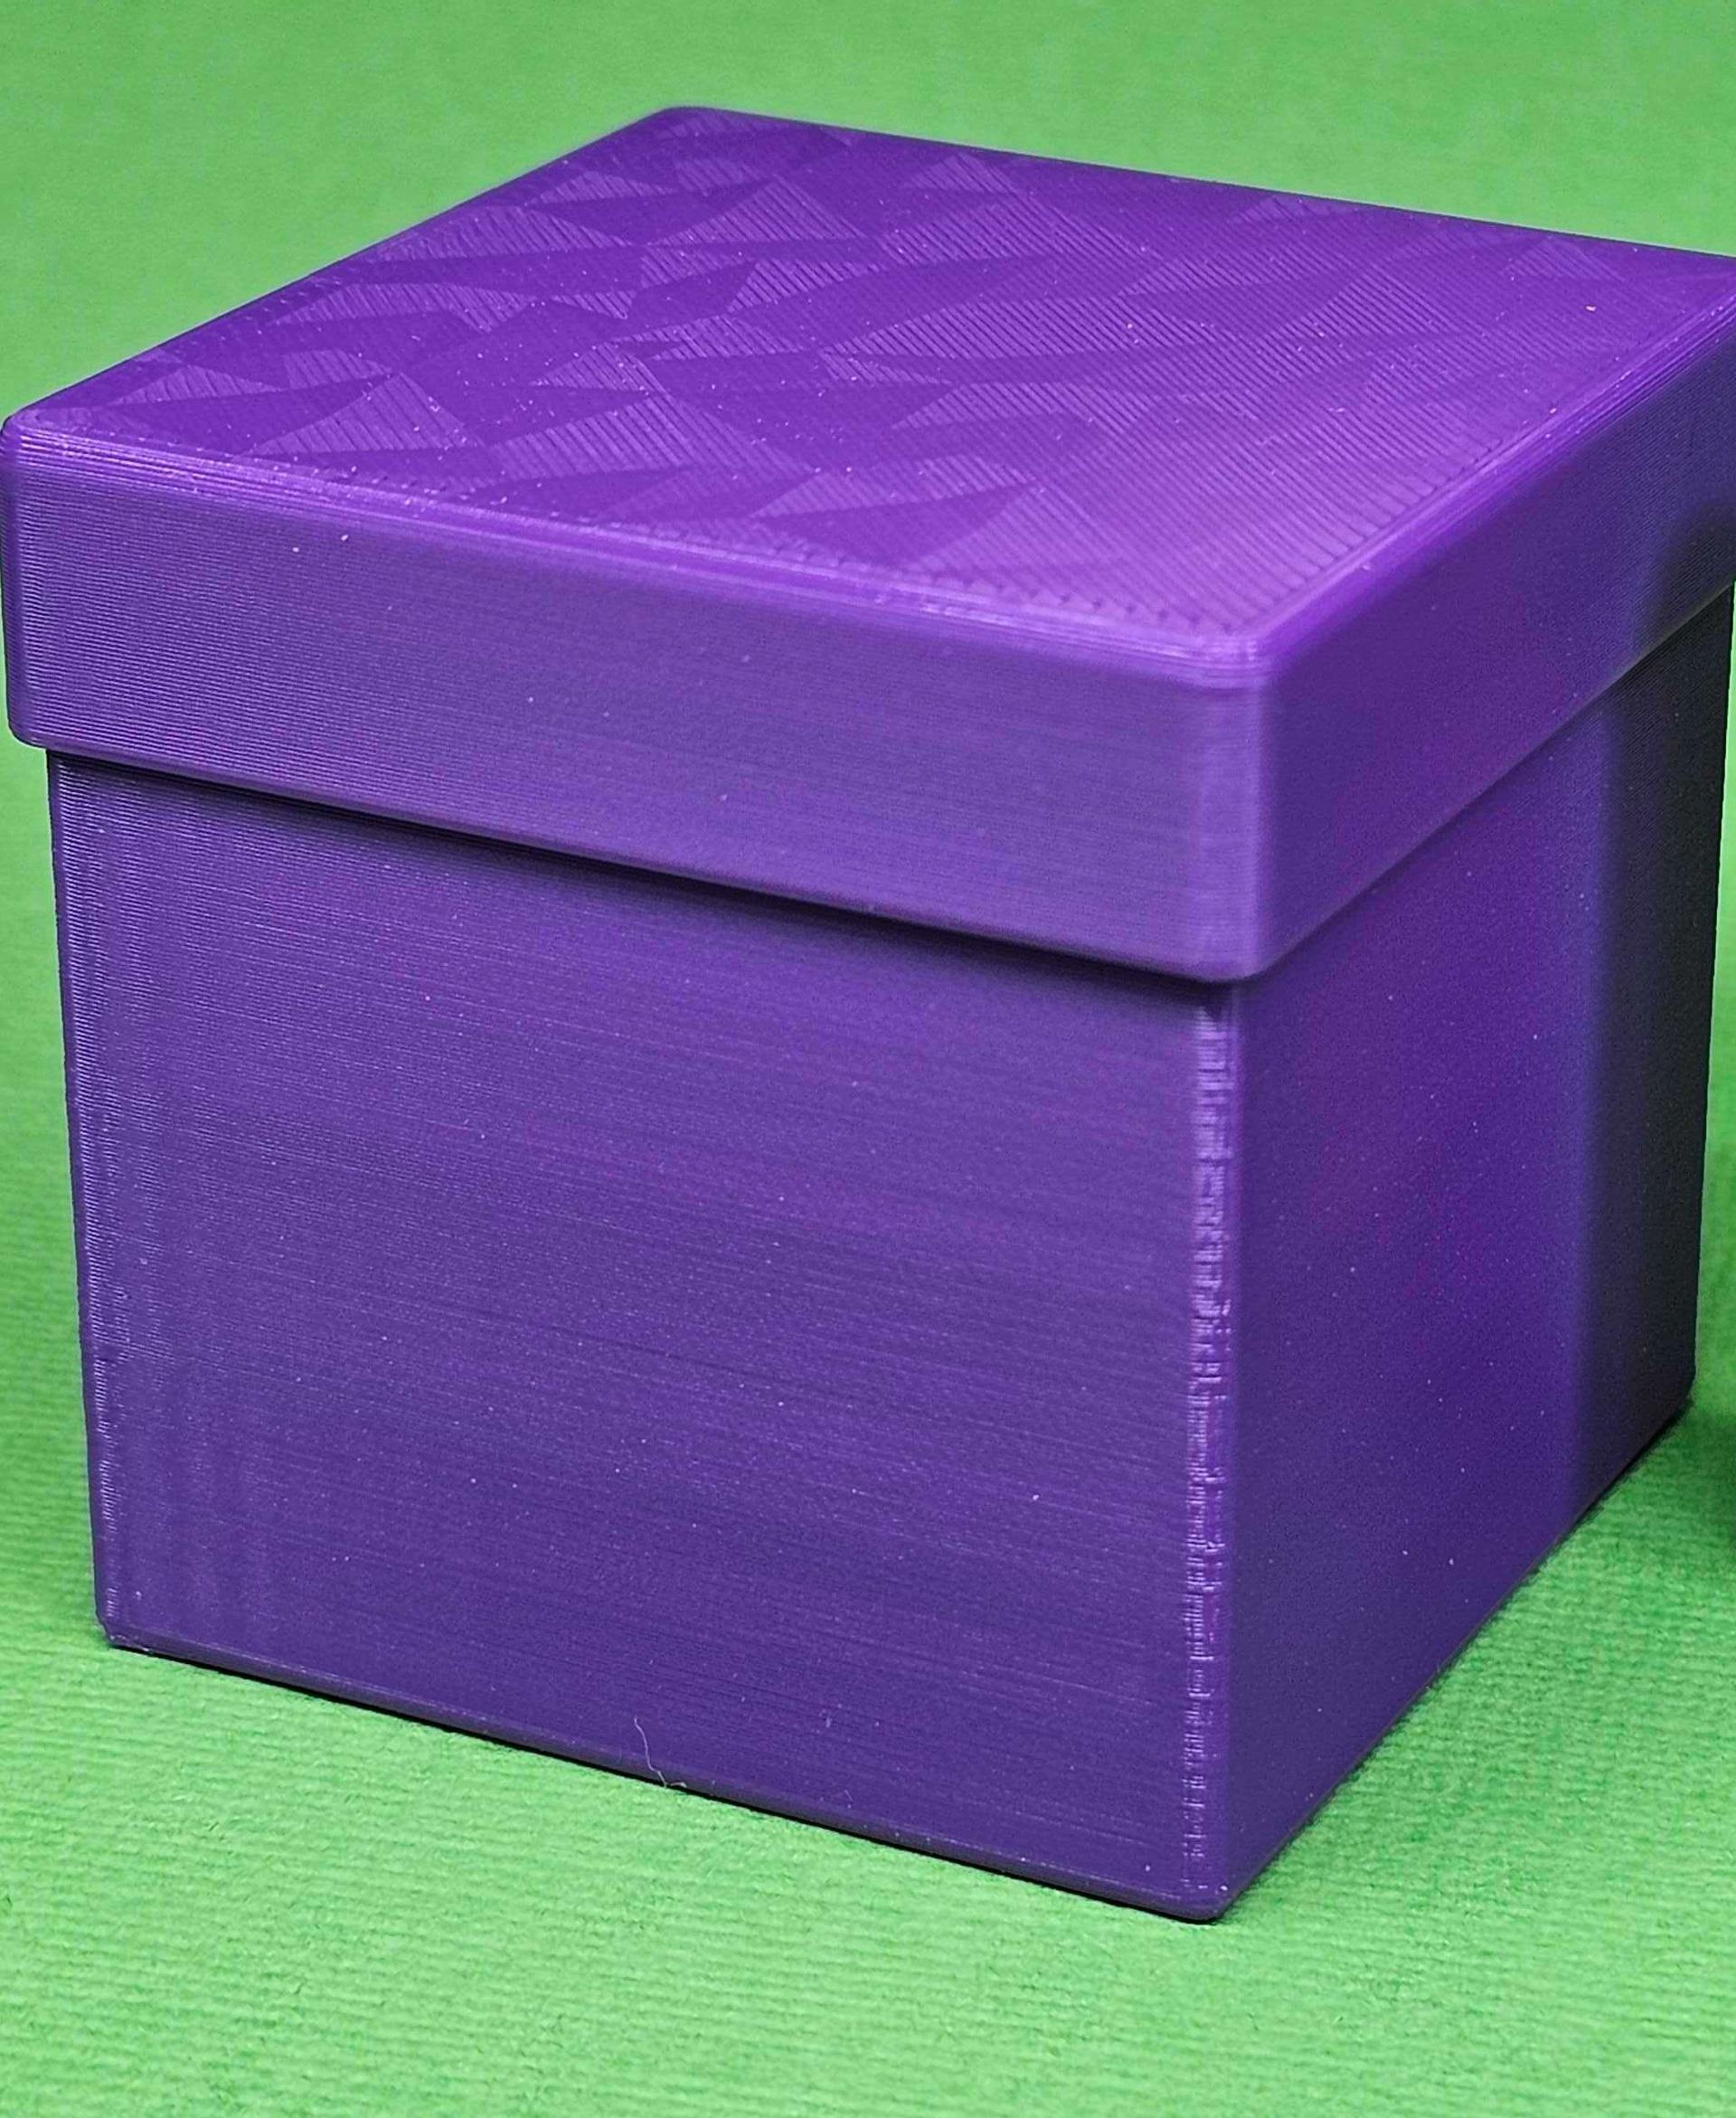 Basic Box A Lite | Gift box | Storage box | Organization | For Christmas gifts & birthday gifts 3d model